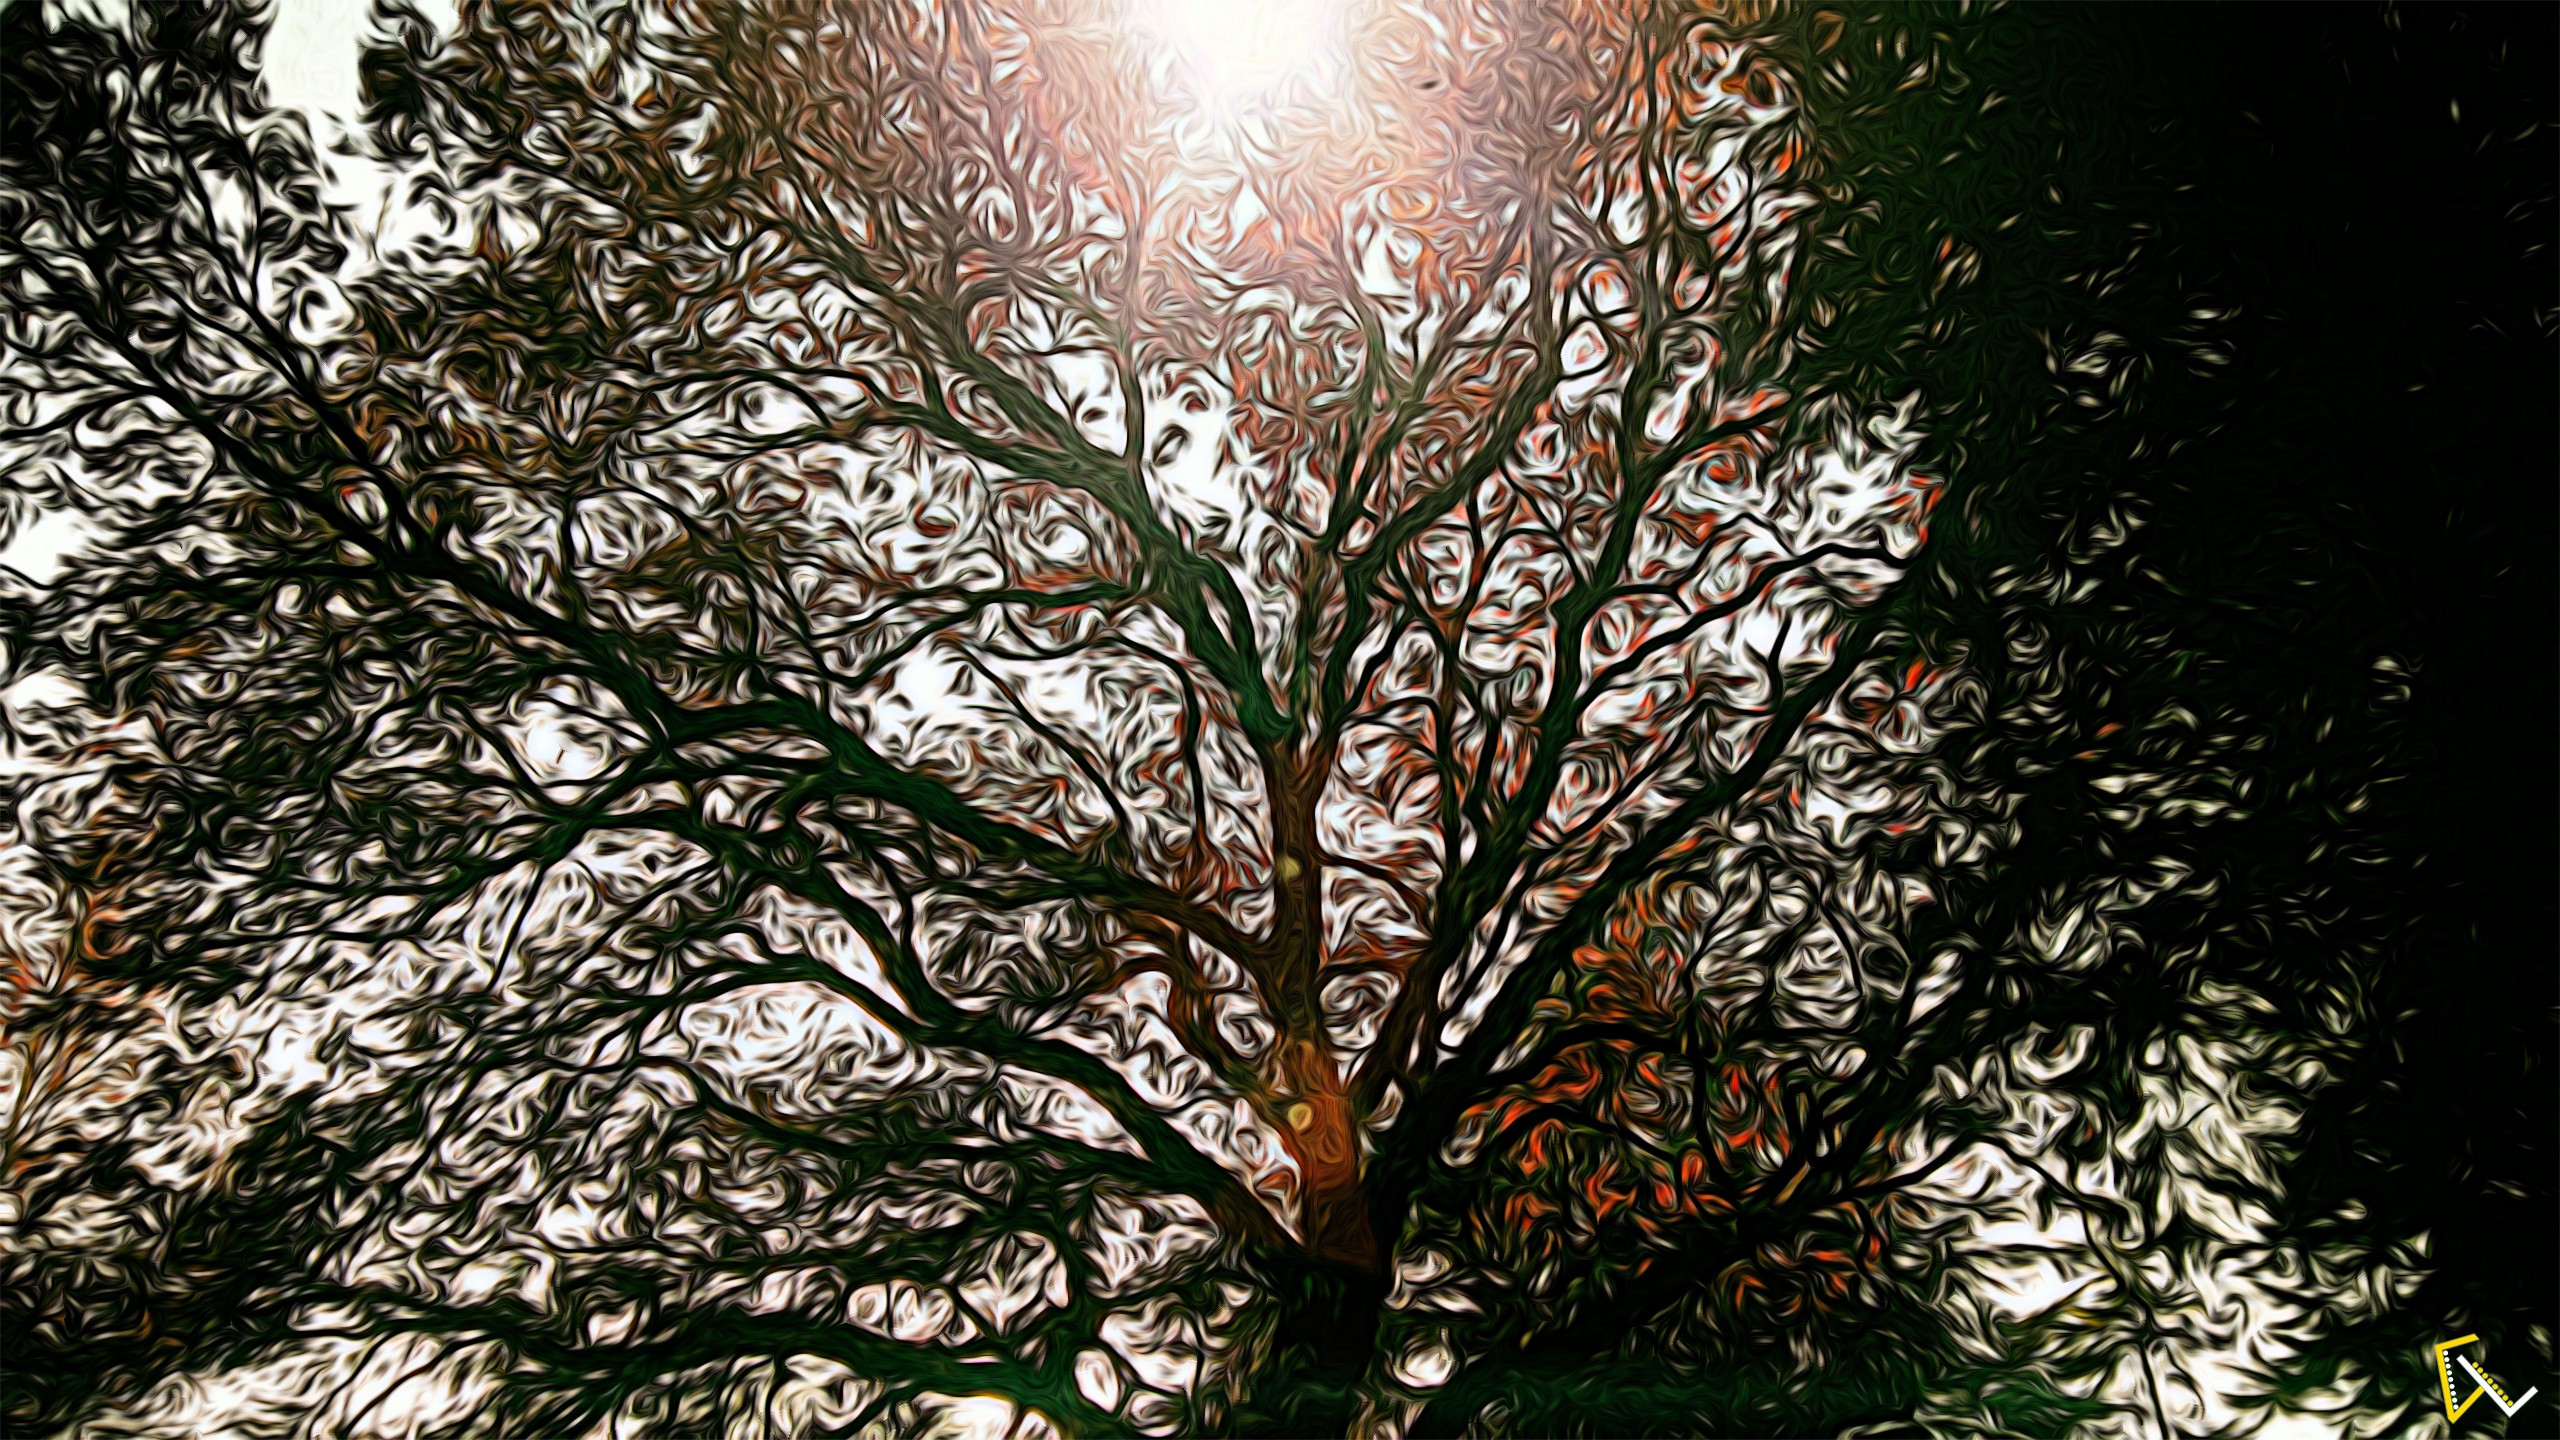 General 2560x1440 nature sun rays photoshopped Sun trees